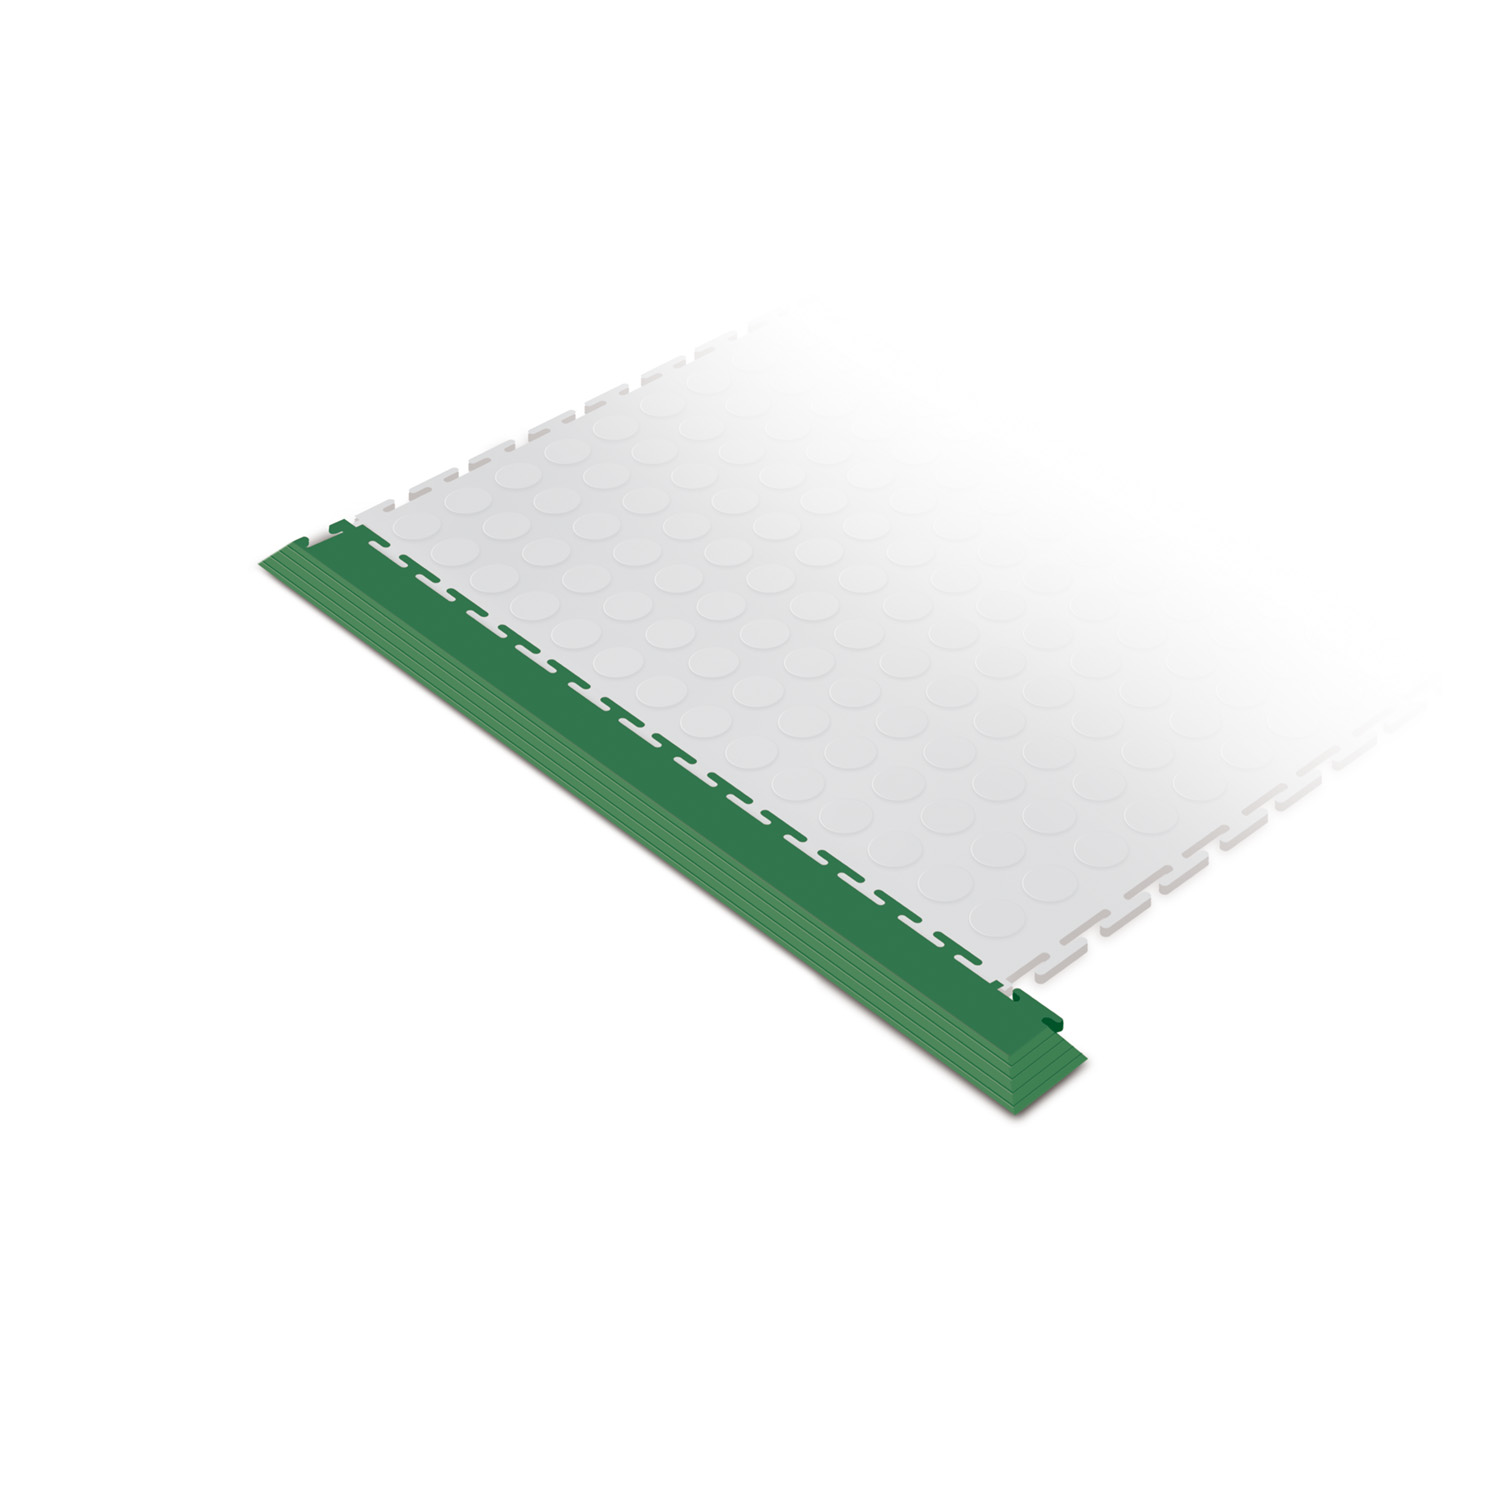 Heavy-duty corner edge ramp tile (green)